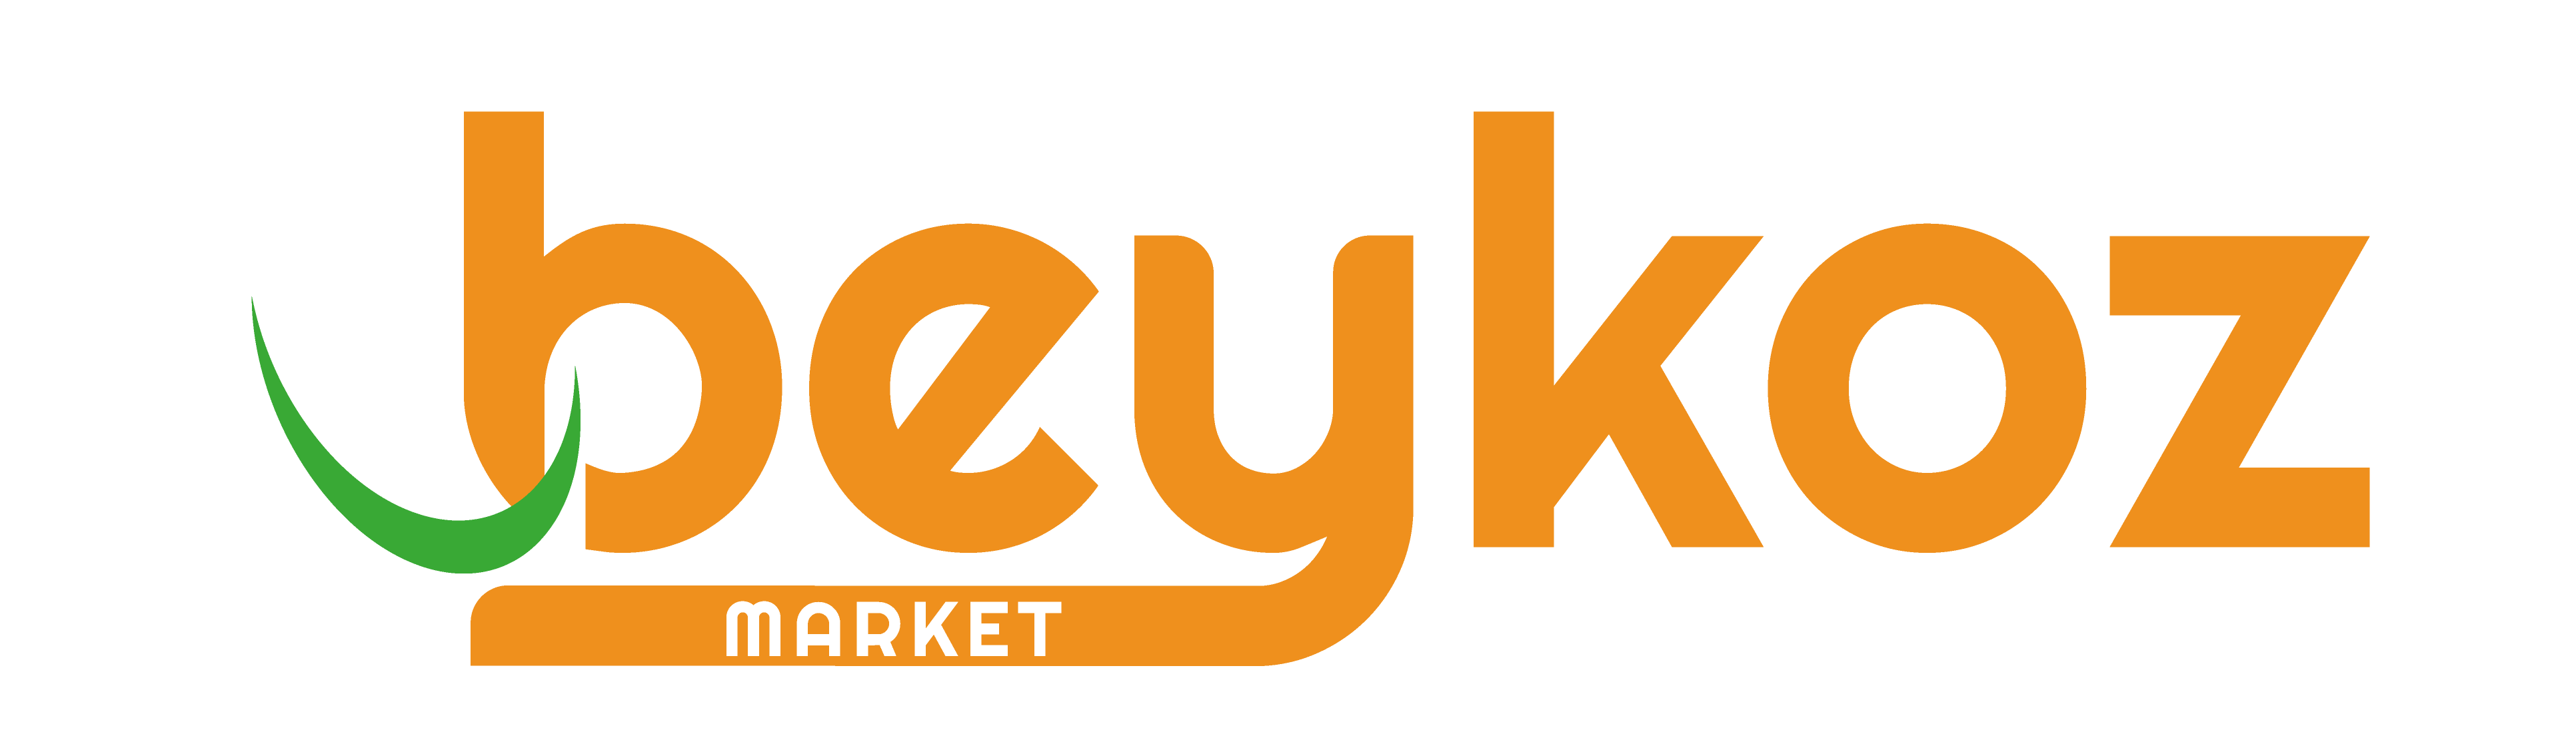 BEYKOZ MARKET Logosu